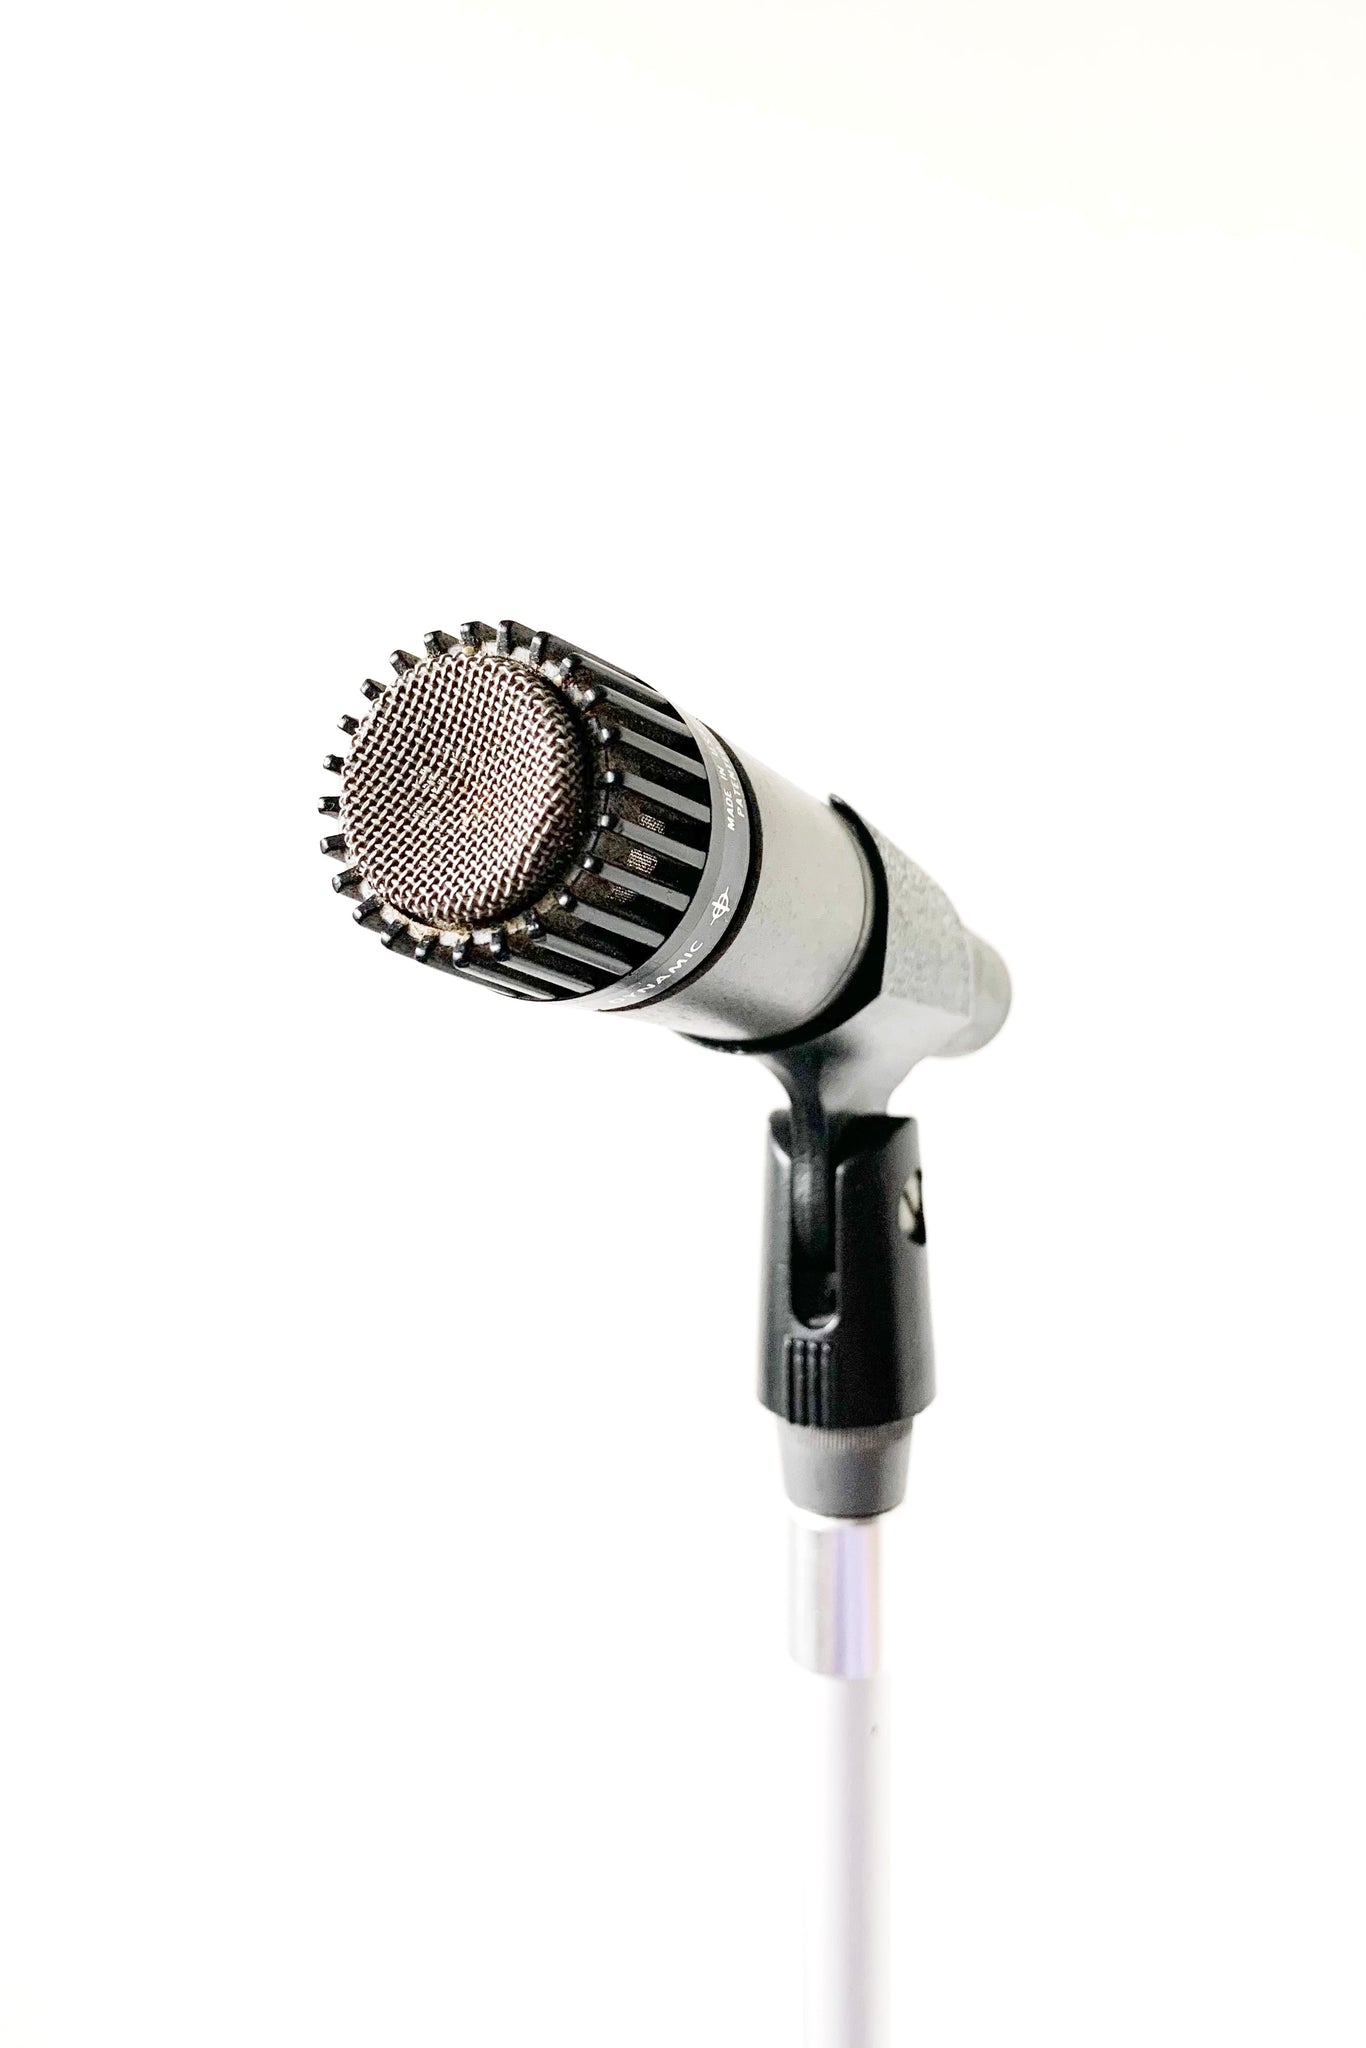 Shure SM57 Unidyne III Dynamic Microphone